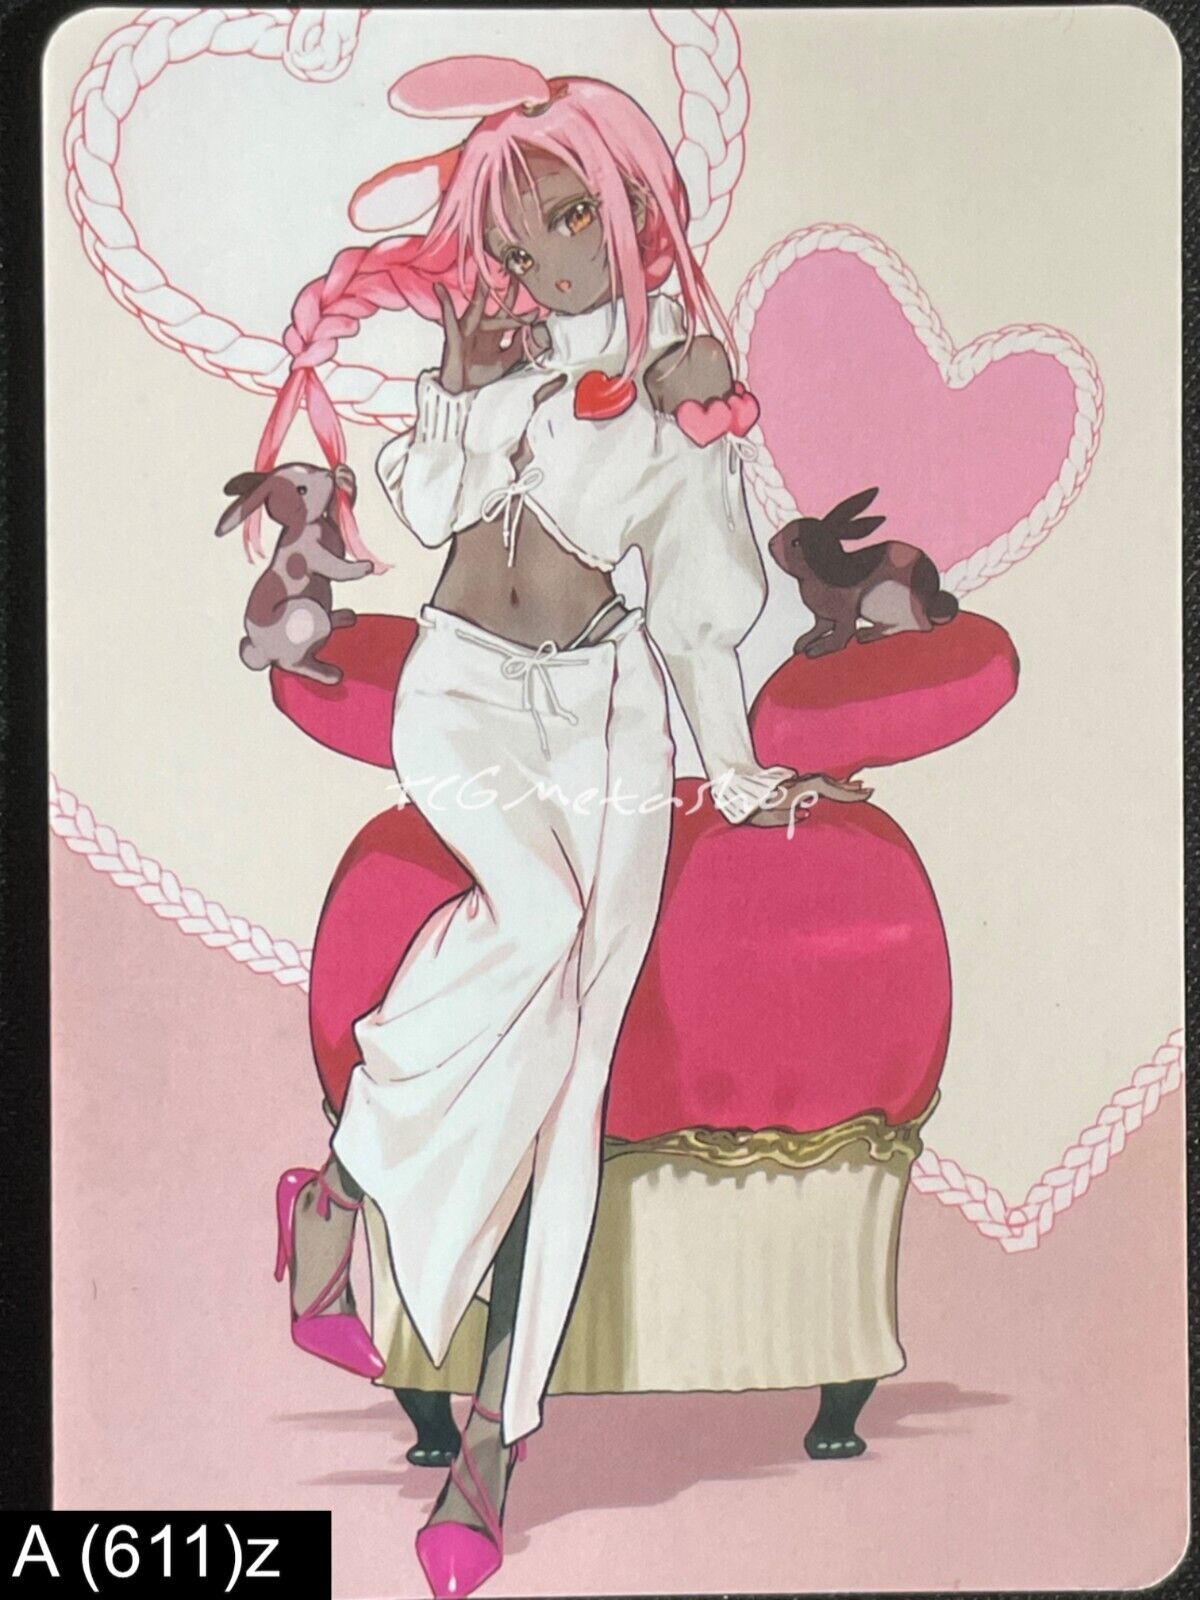 🔥 A 611 Cute Girl Goddess Story Anime Waifu Card ACG 🔥